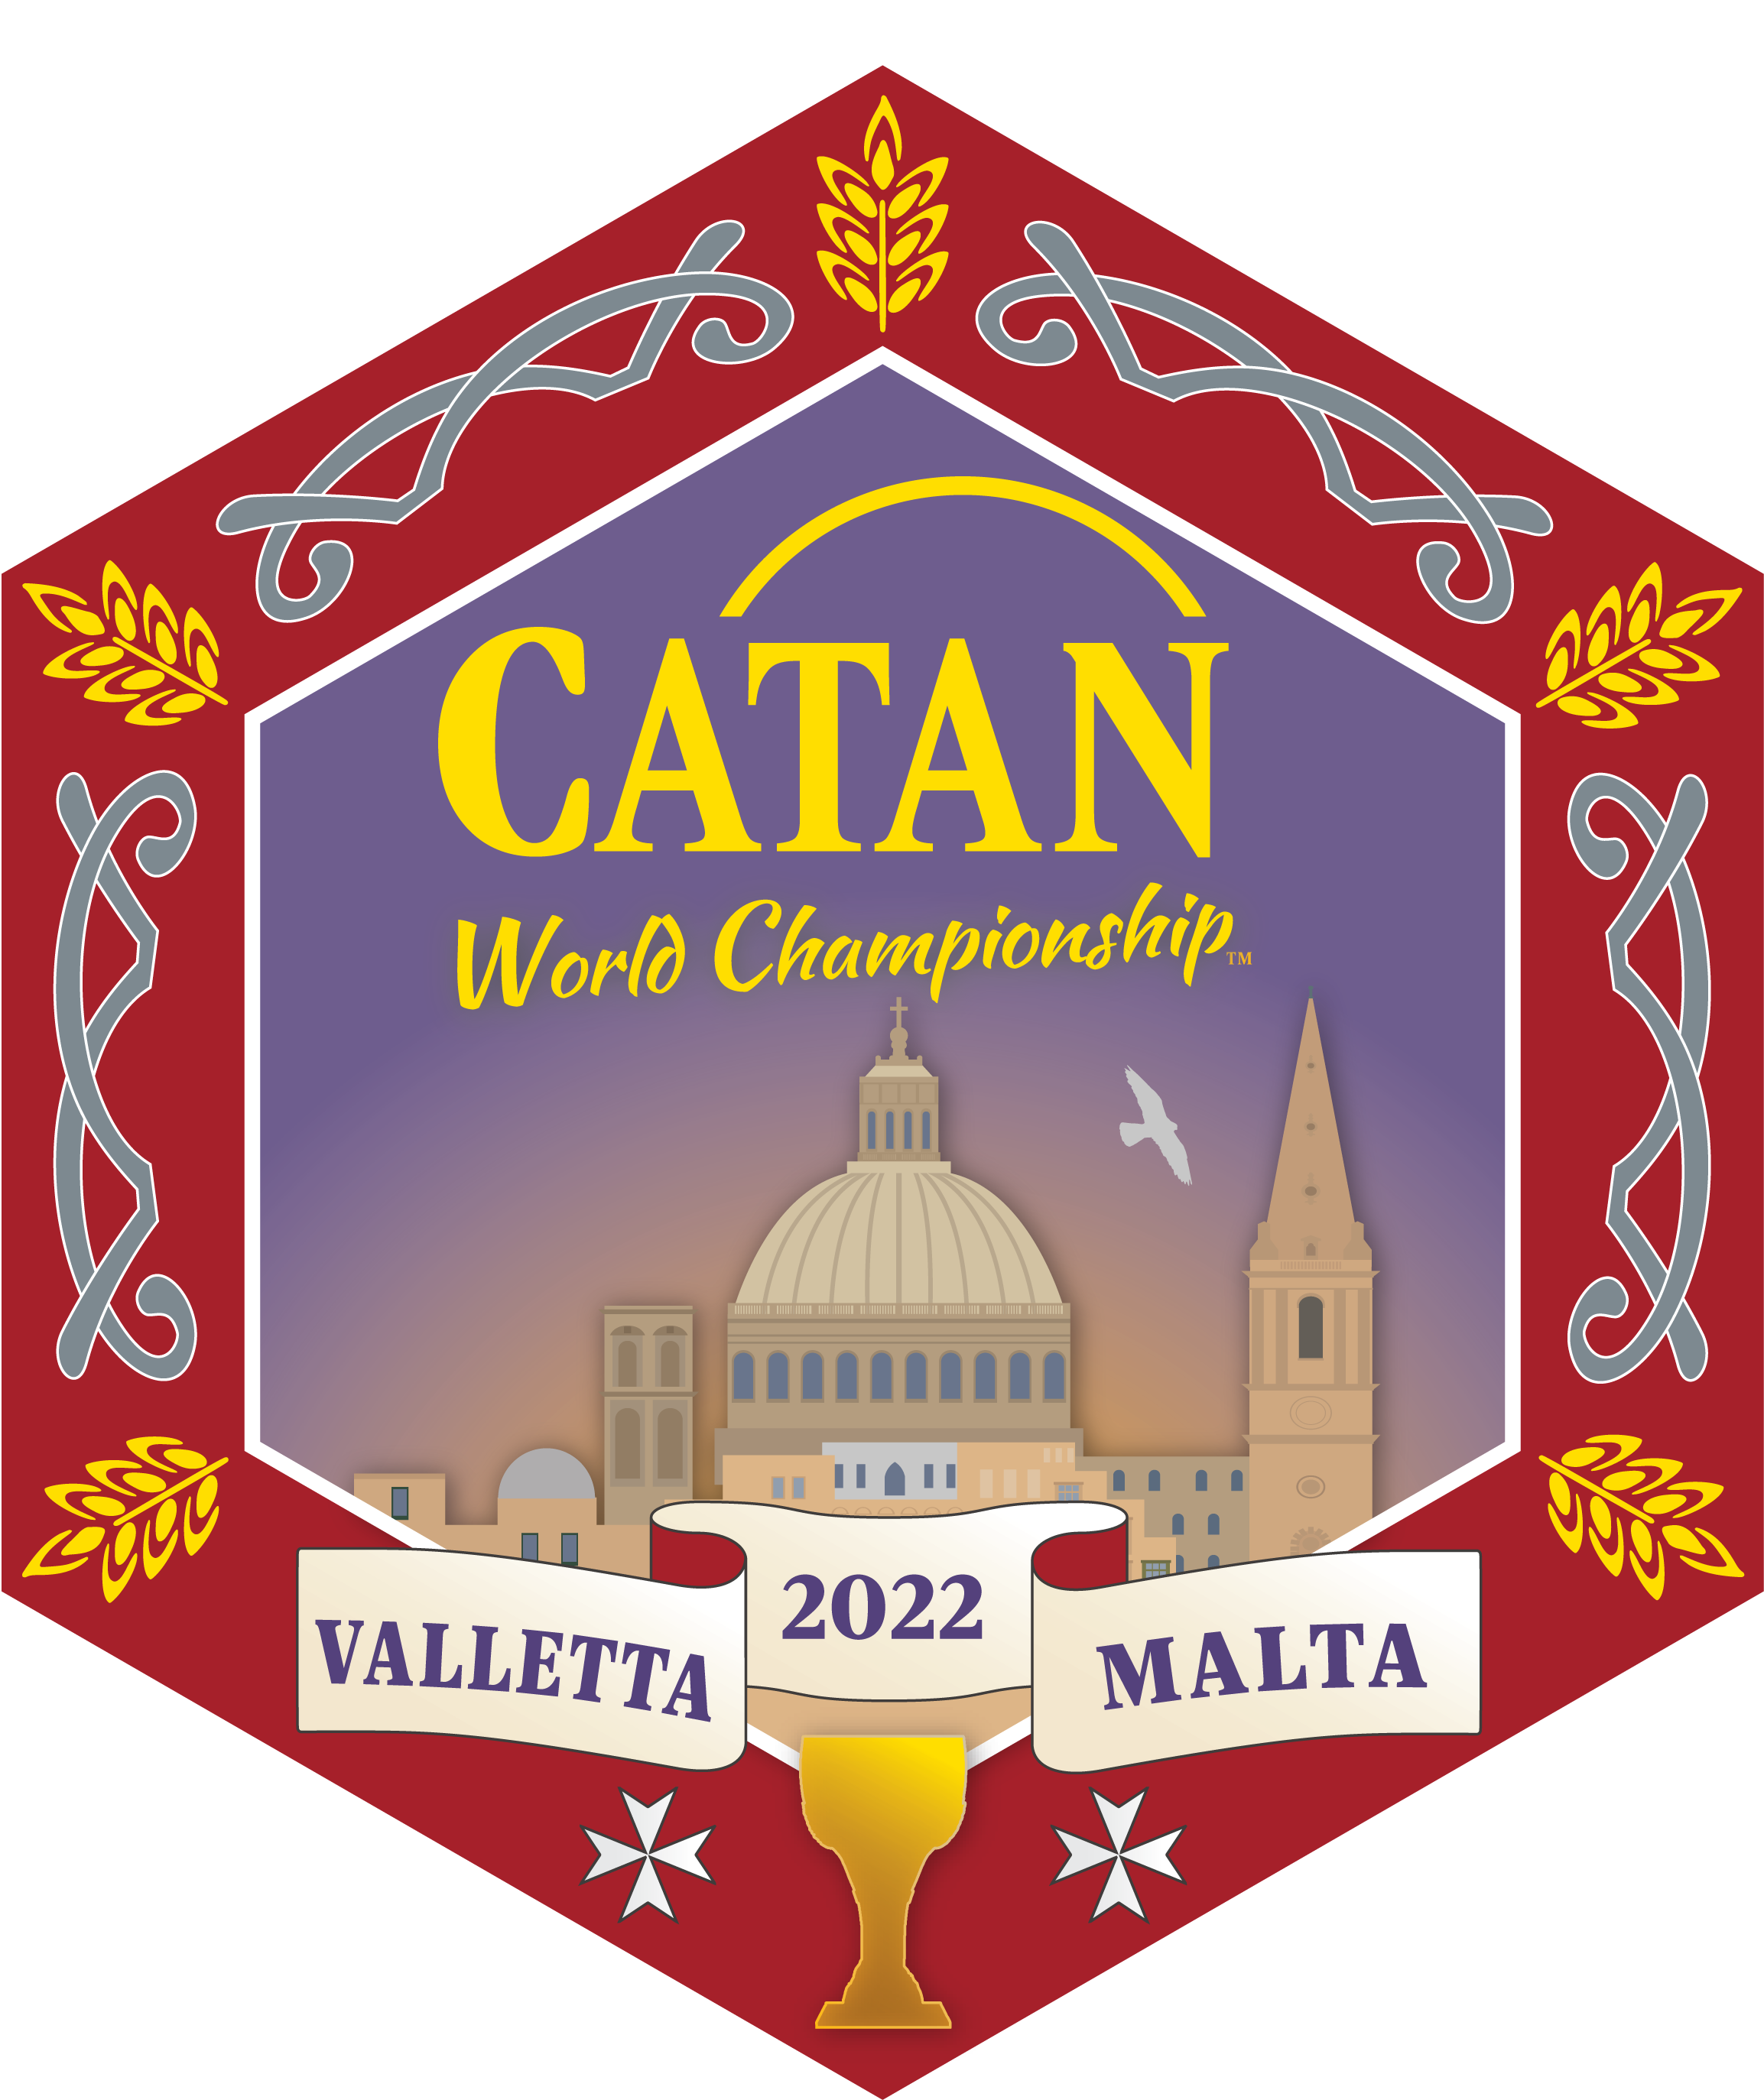 CATAN World Championship 2022